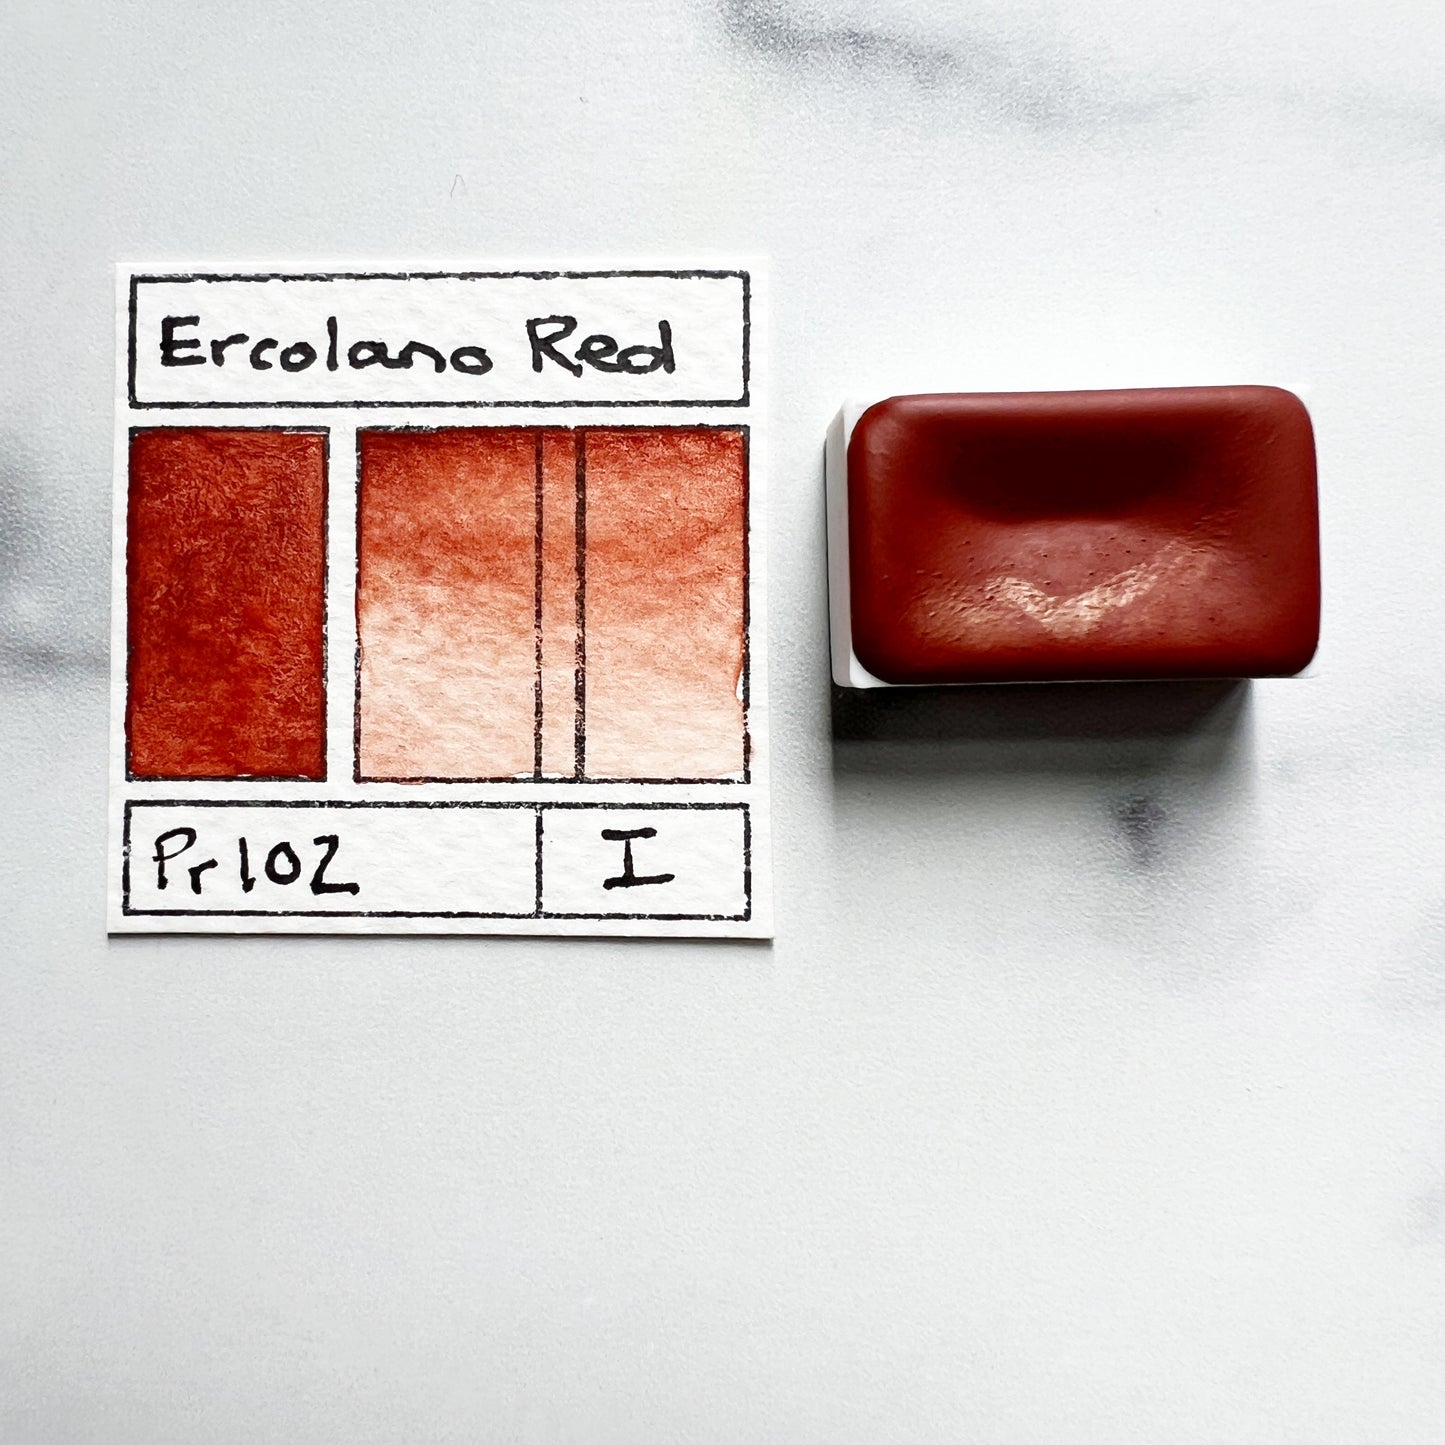 Ercolano Red. Half pan or bottle cap of handmade watercolor paint